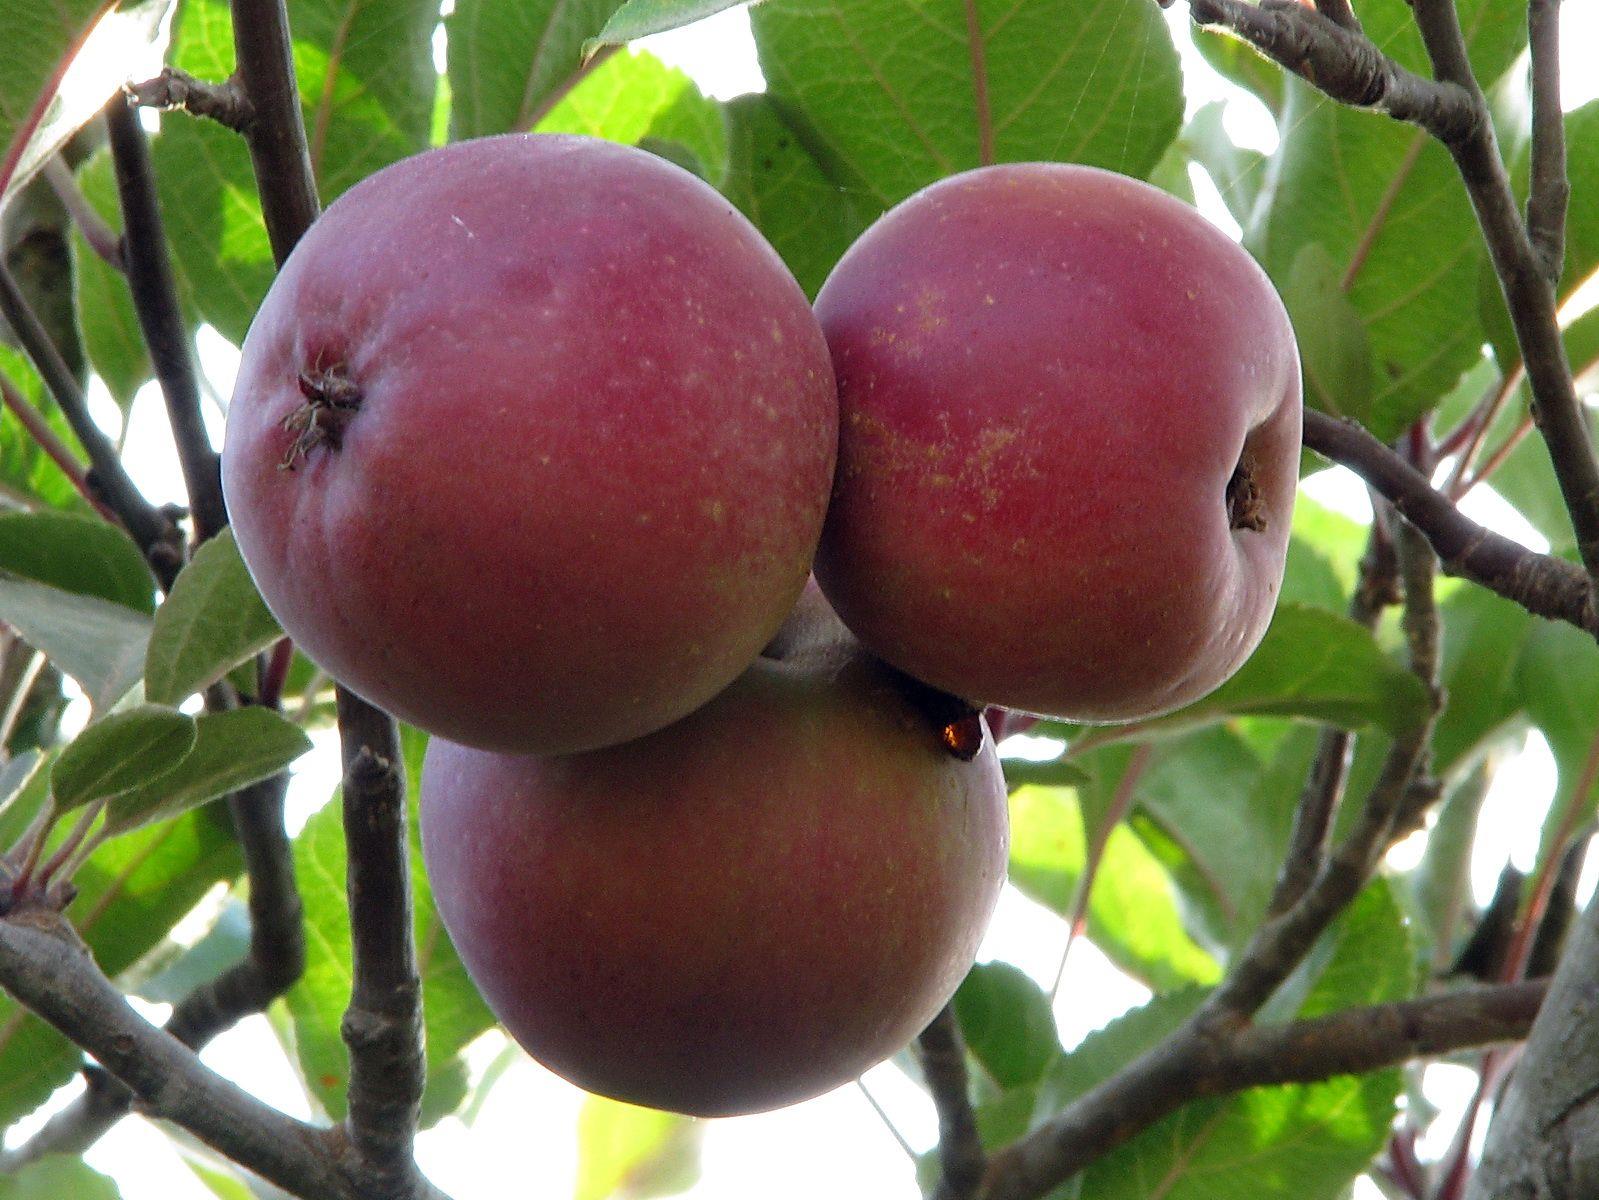 Malus sylvestris subsp. mitis - תפוח היערות, תפוח היערות